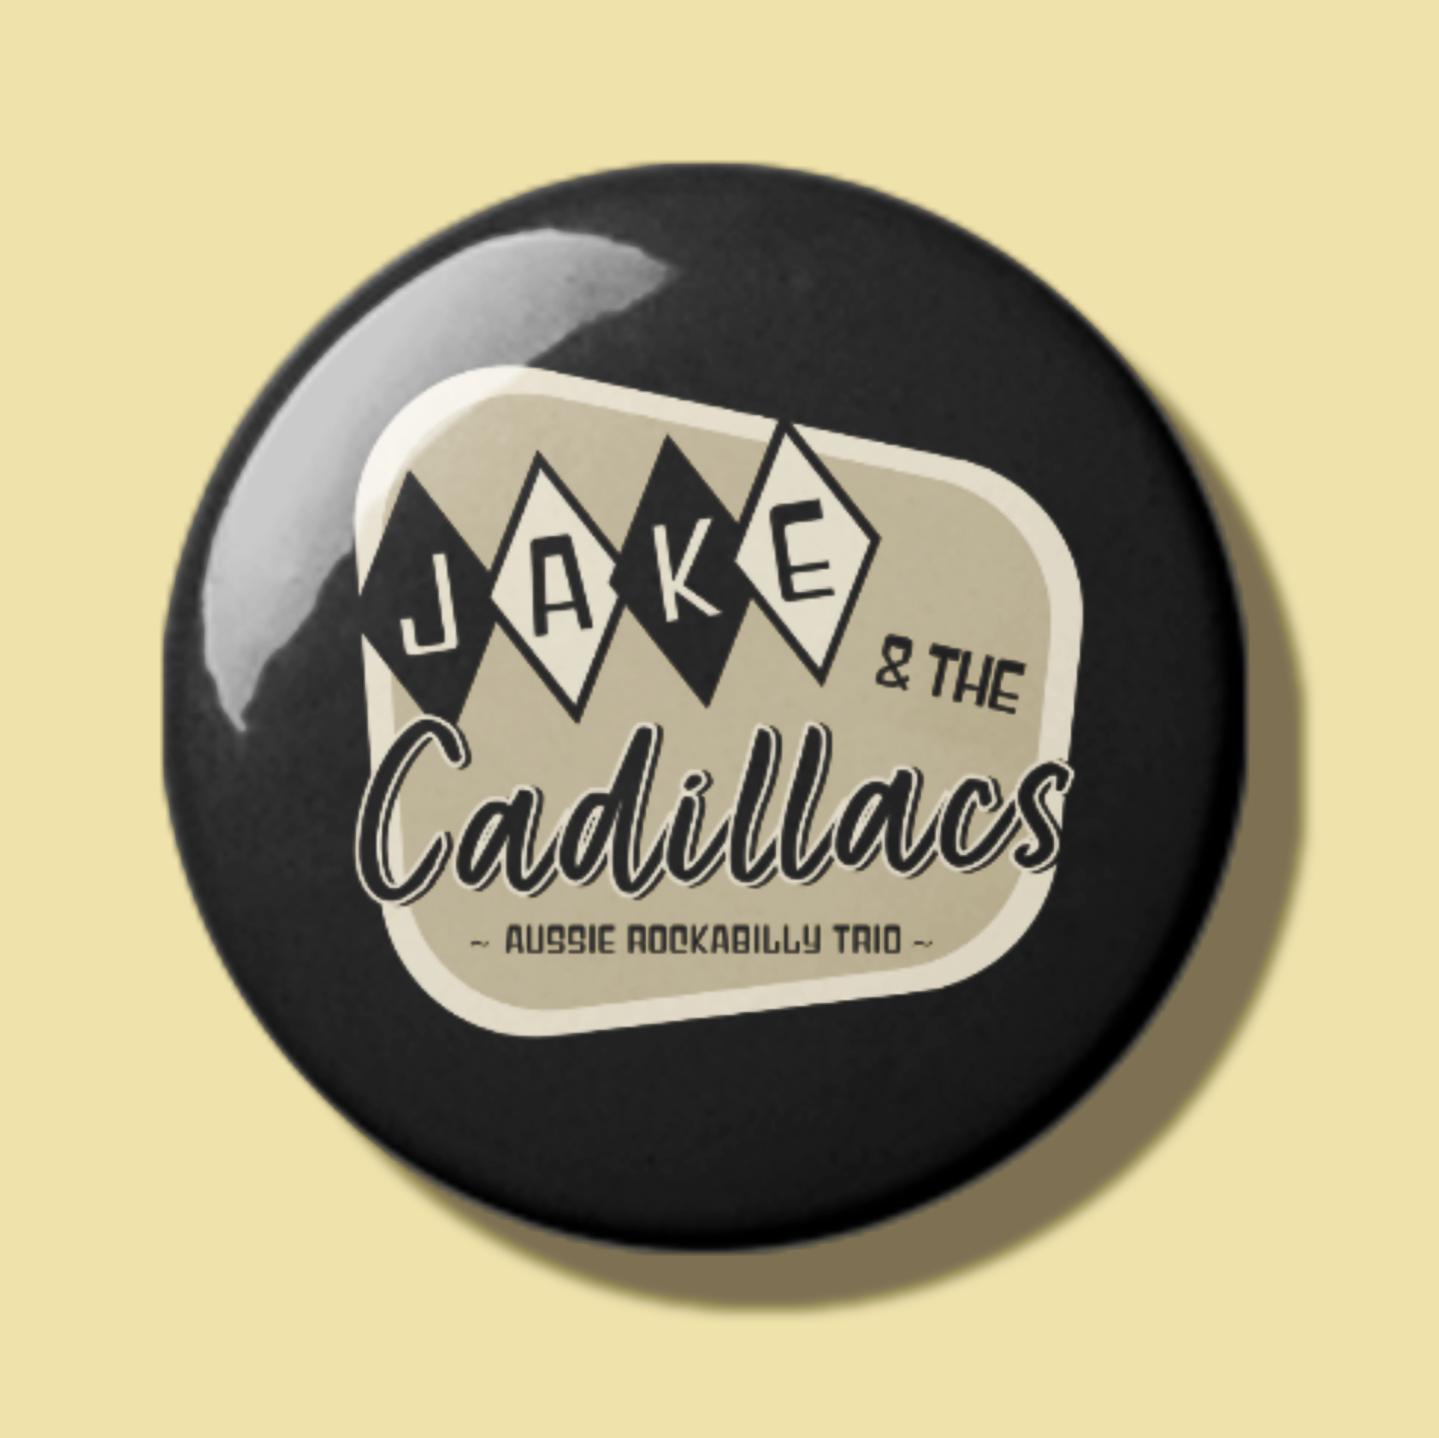 "Jake and the Cadillacs" Button Pin Badge - Rockabilly Australia Pty Ltd